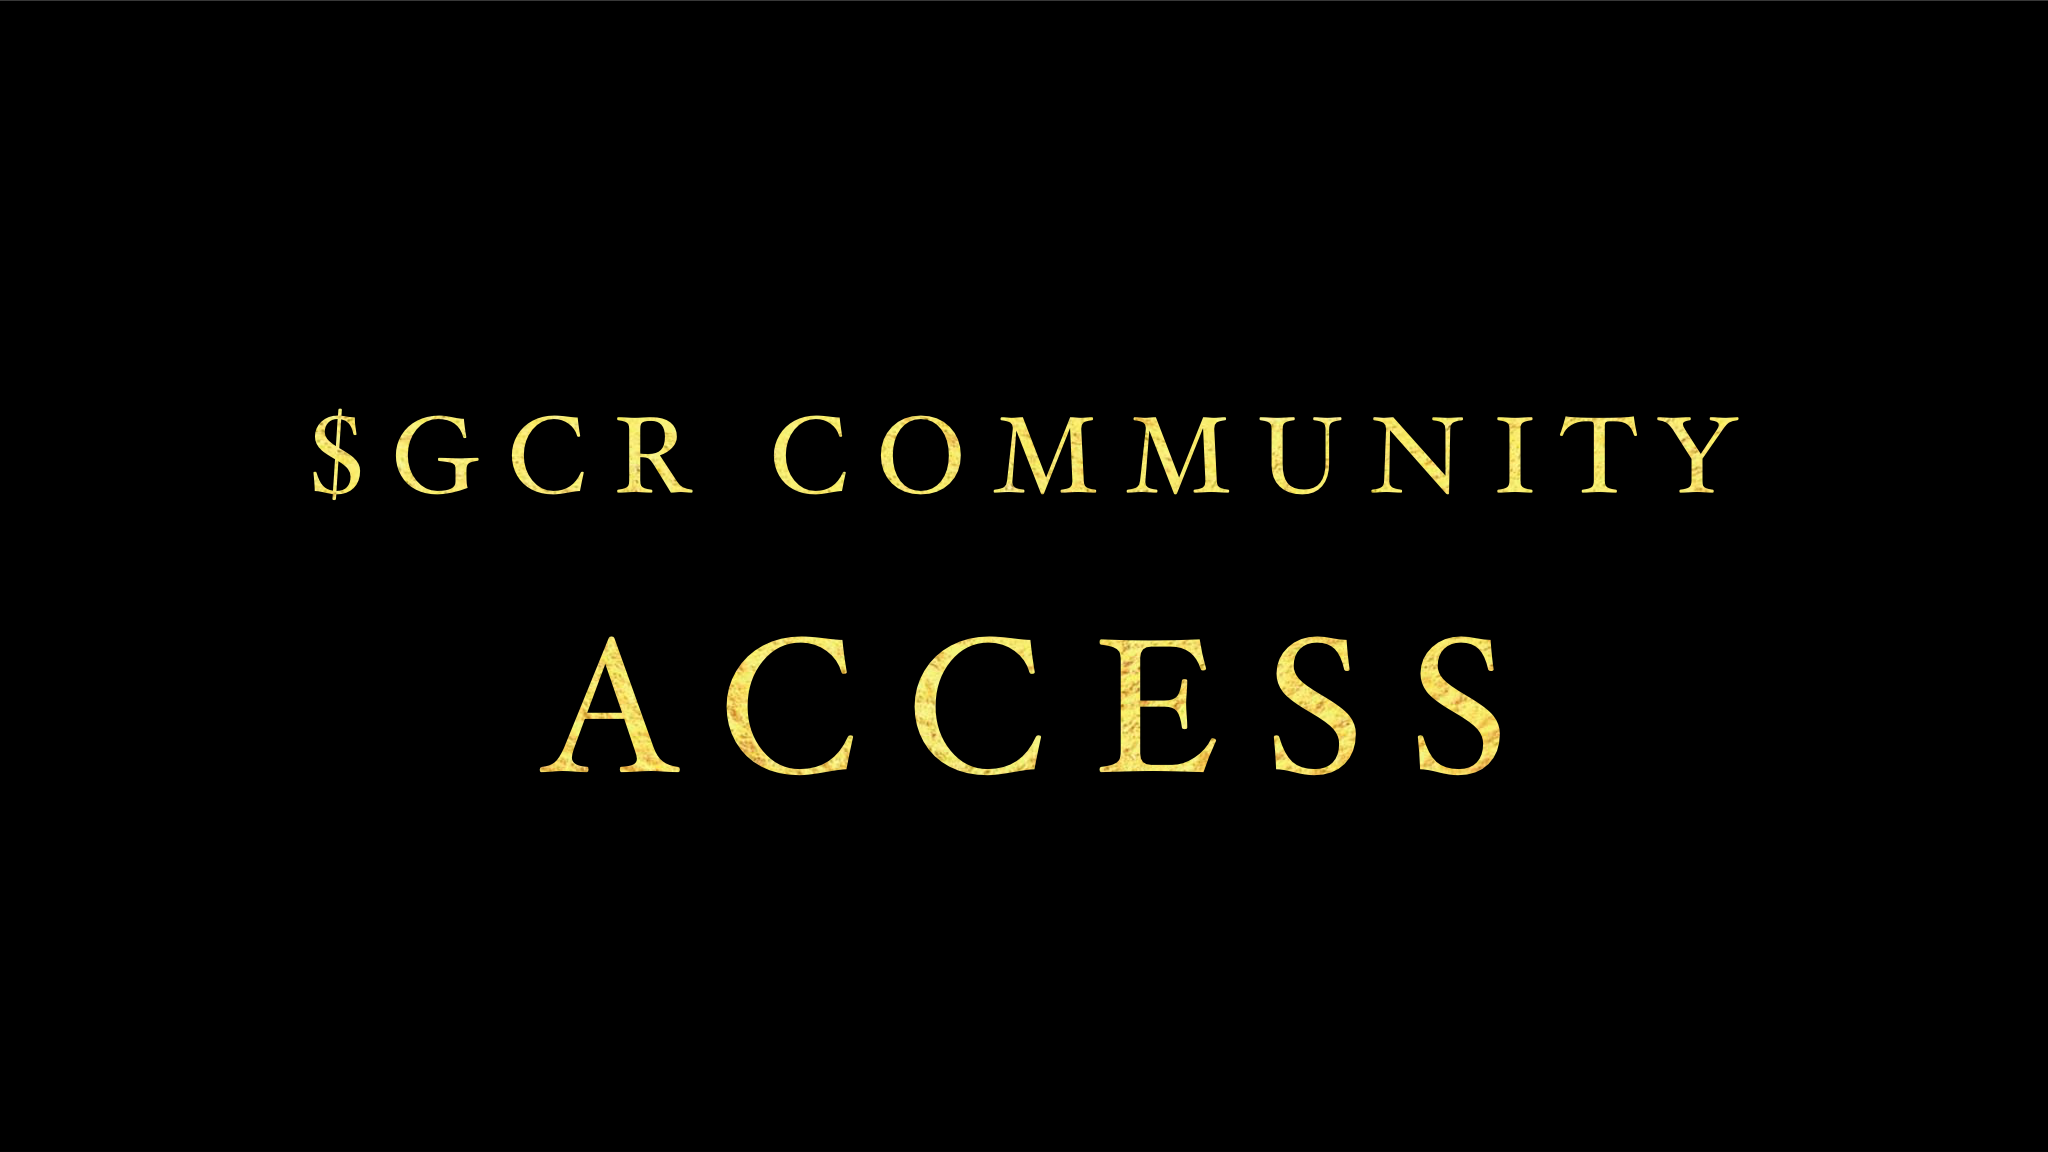 The $GCR Community